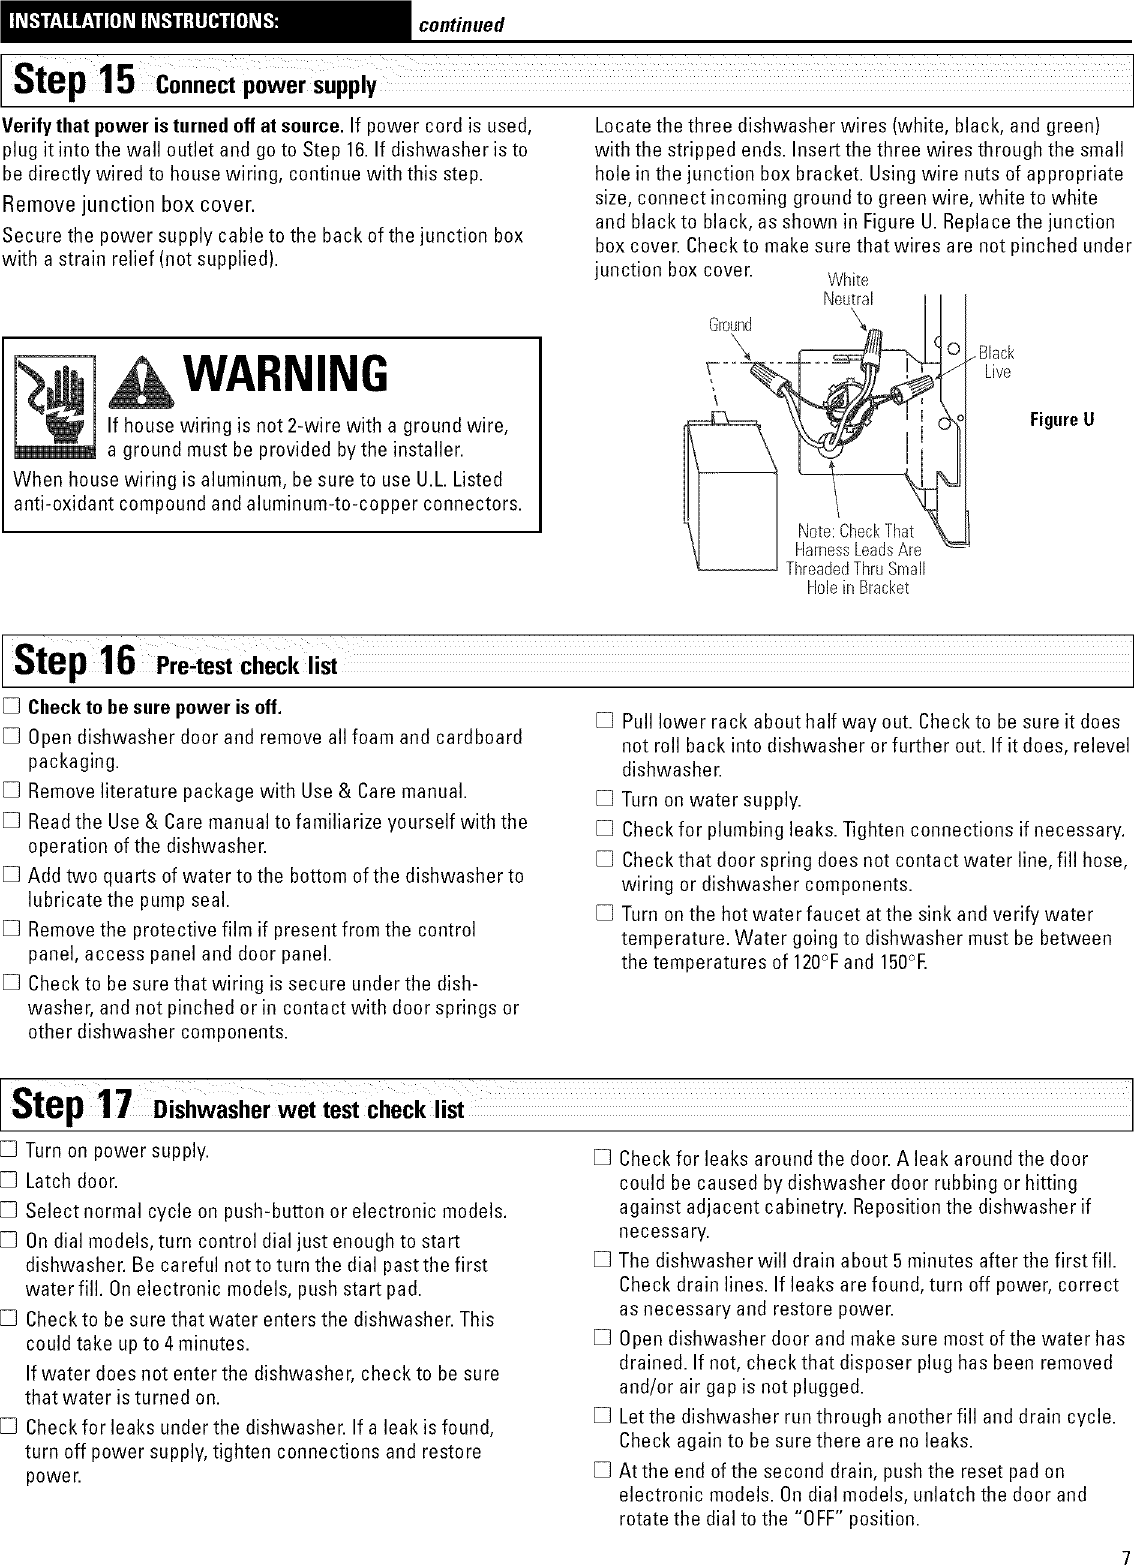 Page 7 of 8 - GE  Dishwasher Manual L0504084